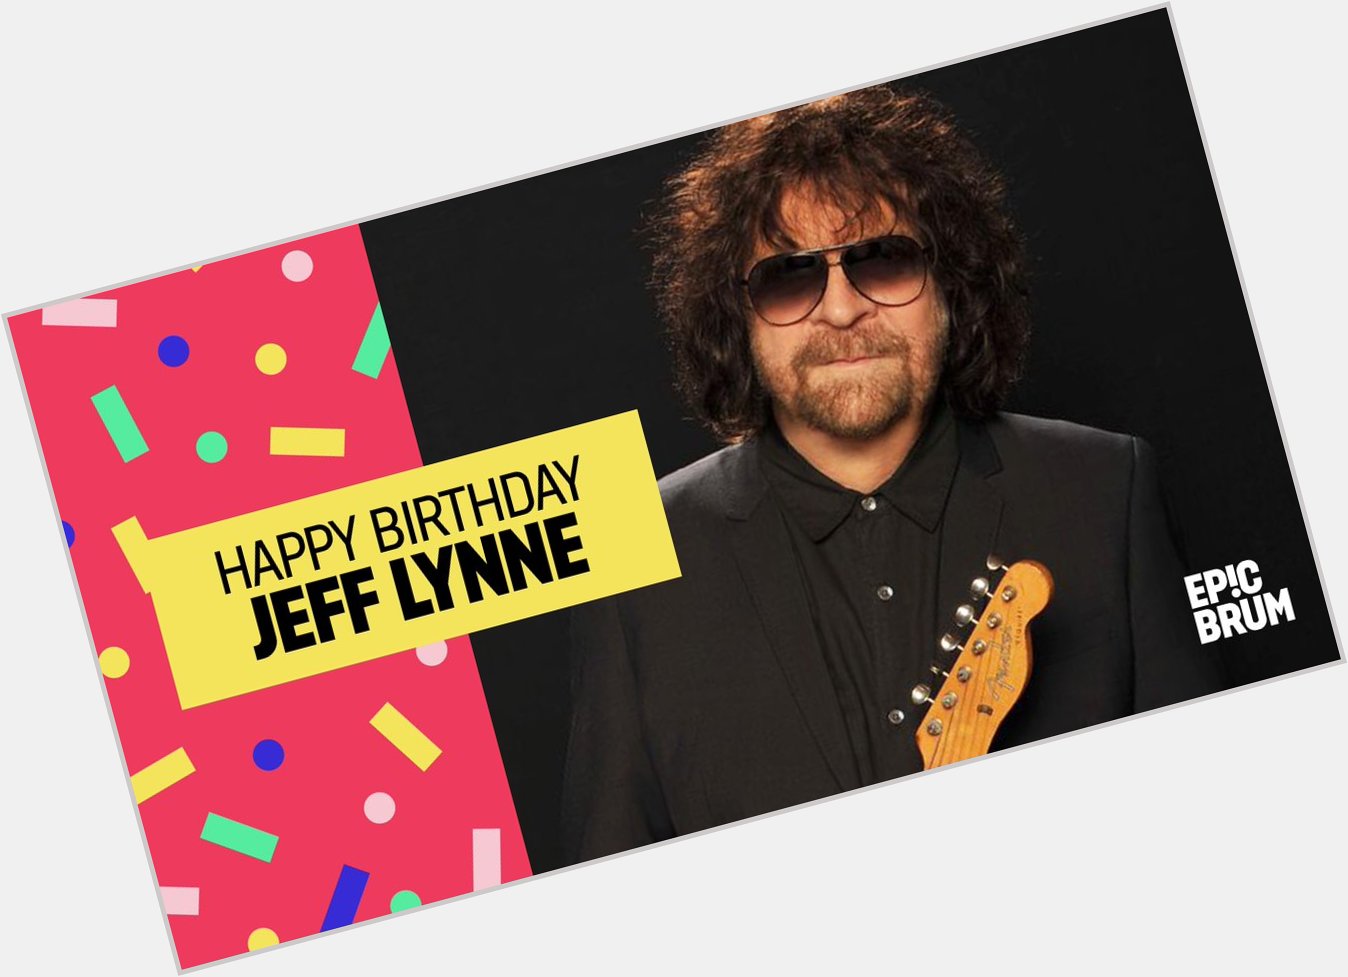  EP!C BIRTHDAY Wishing Brummie Jeff Lynne, of legendary rock band ELO, a very happy birthday today! 